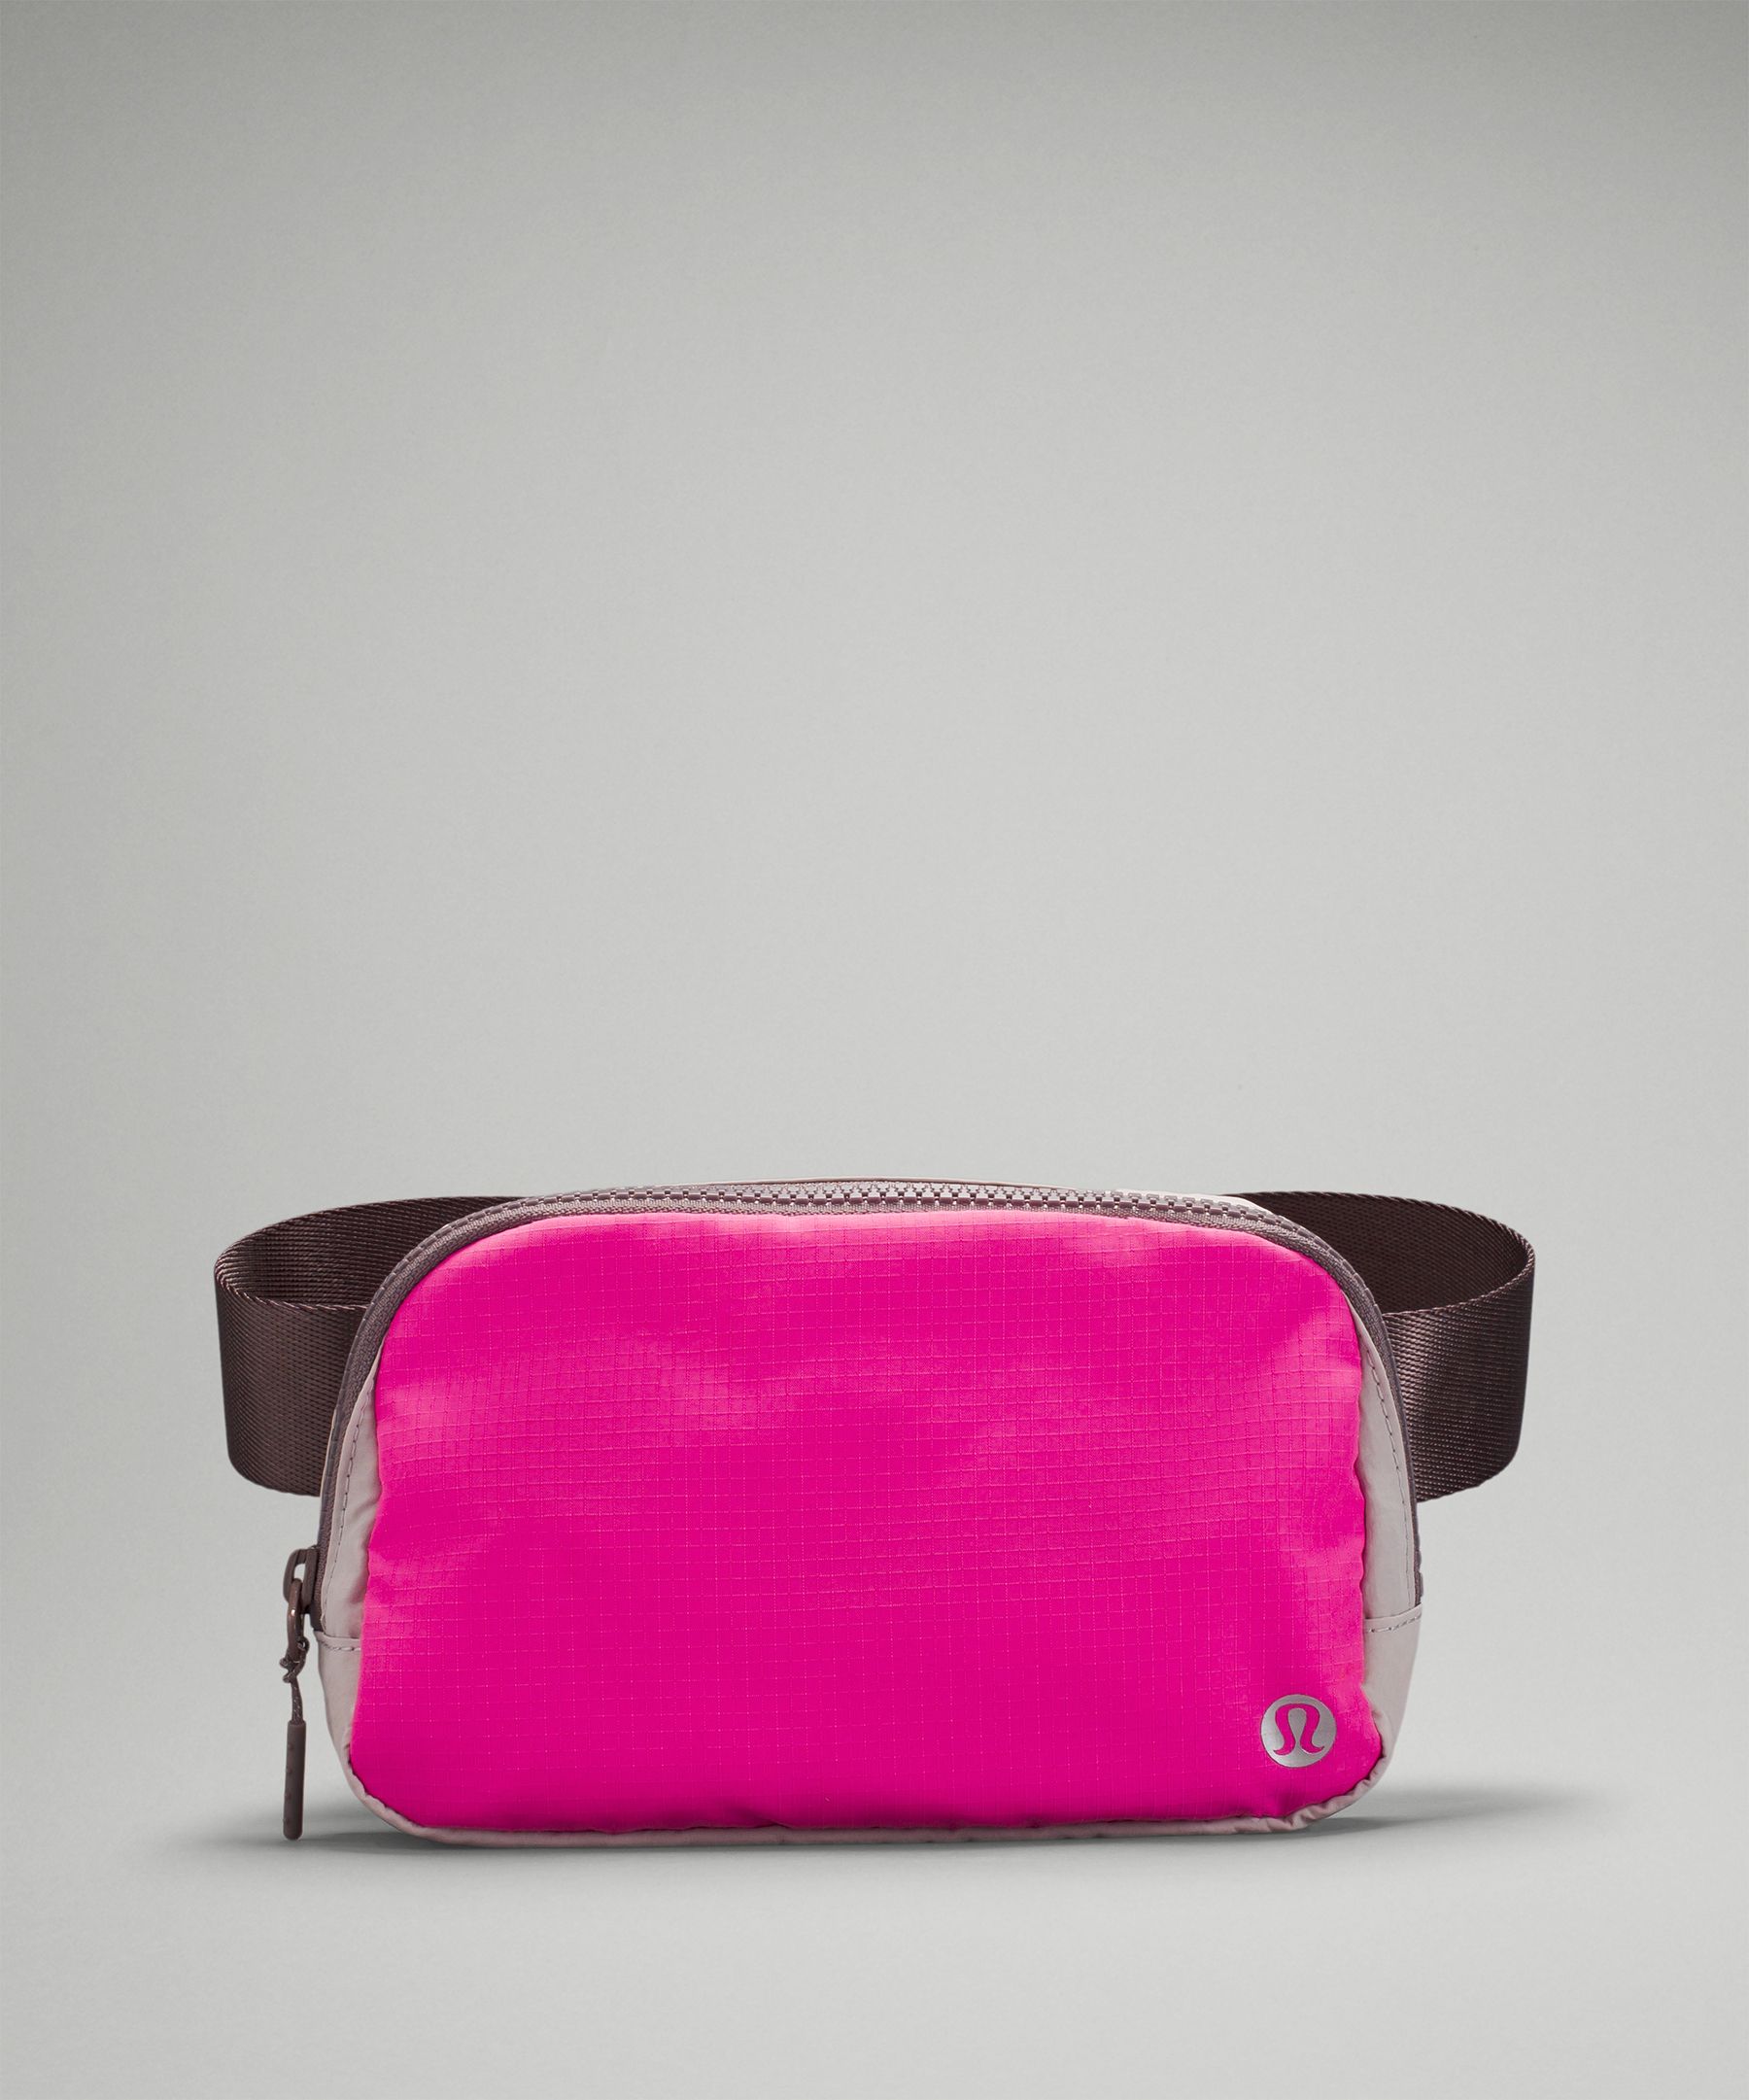 Lululemon Everywhere Belt Bag In Pow Pink Light/lunar Rock/chrome